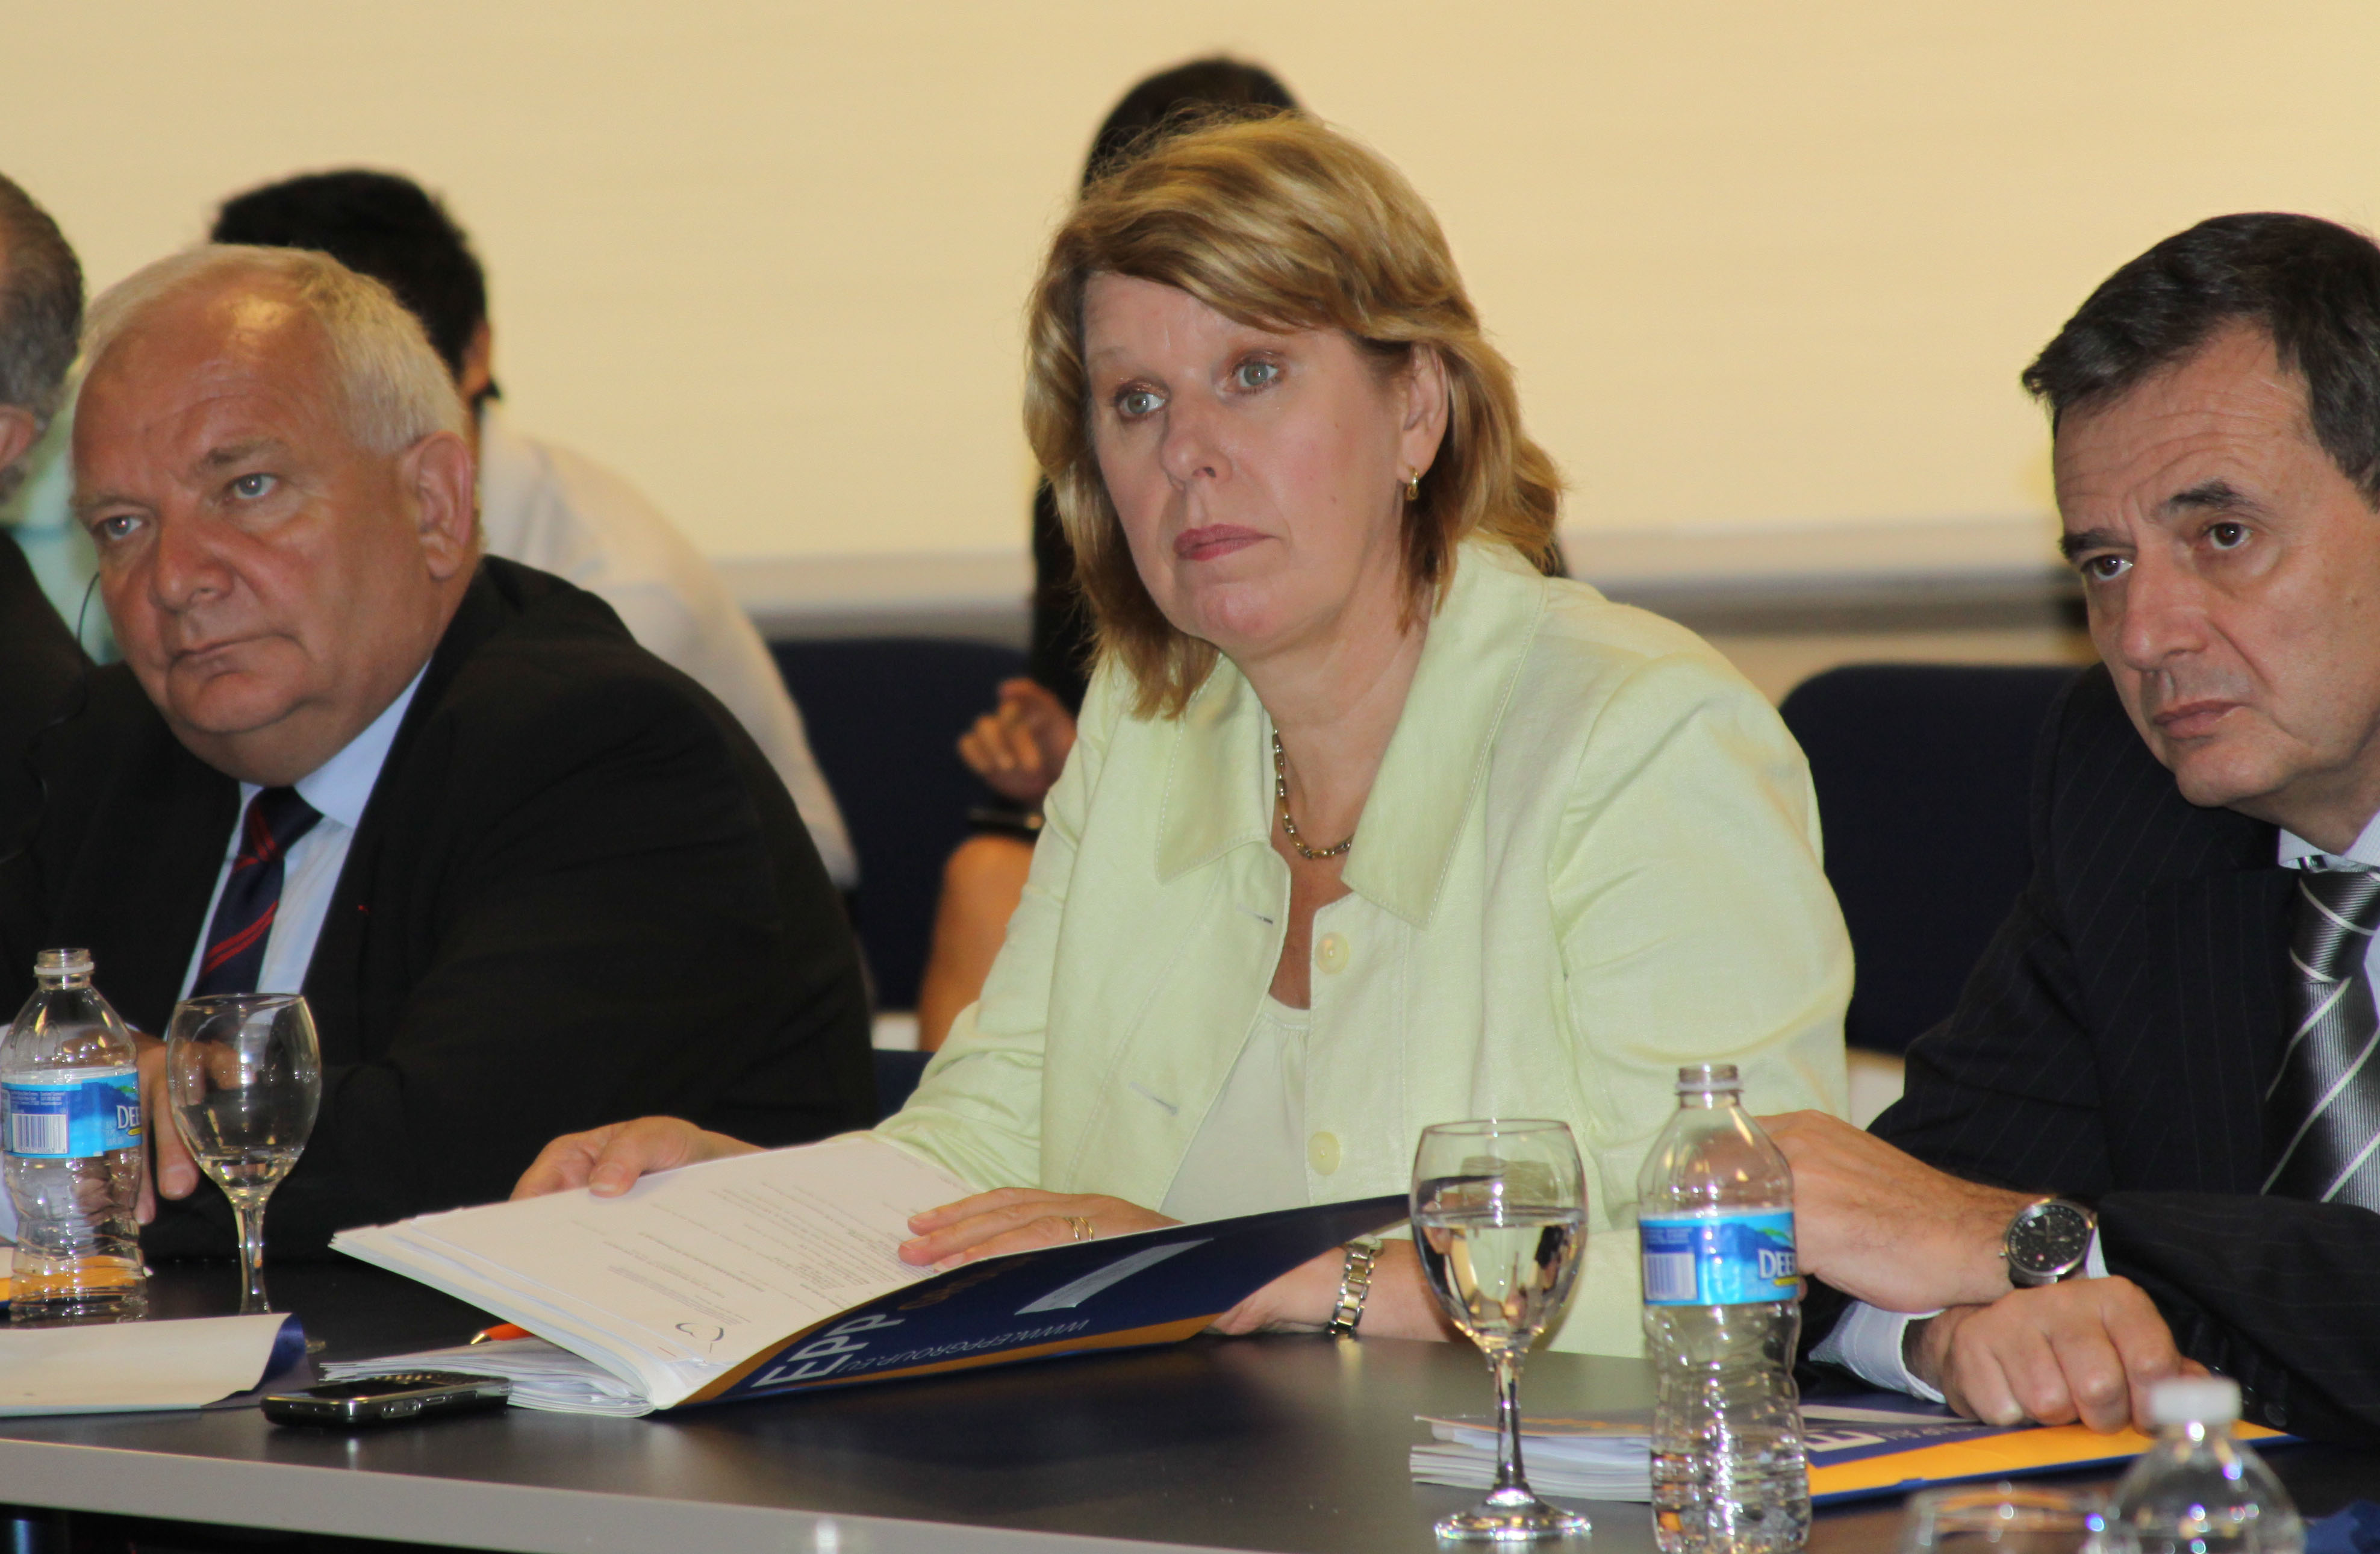 From left, EPP Chairman Joseph Daul, Vice Chairwoman Corien Wortmann-Kool, and Vice Chairman Marian-Jean Marinescu attend a briefing at IRI's Washington headquarters.